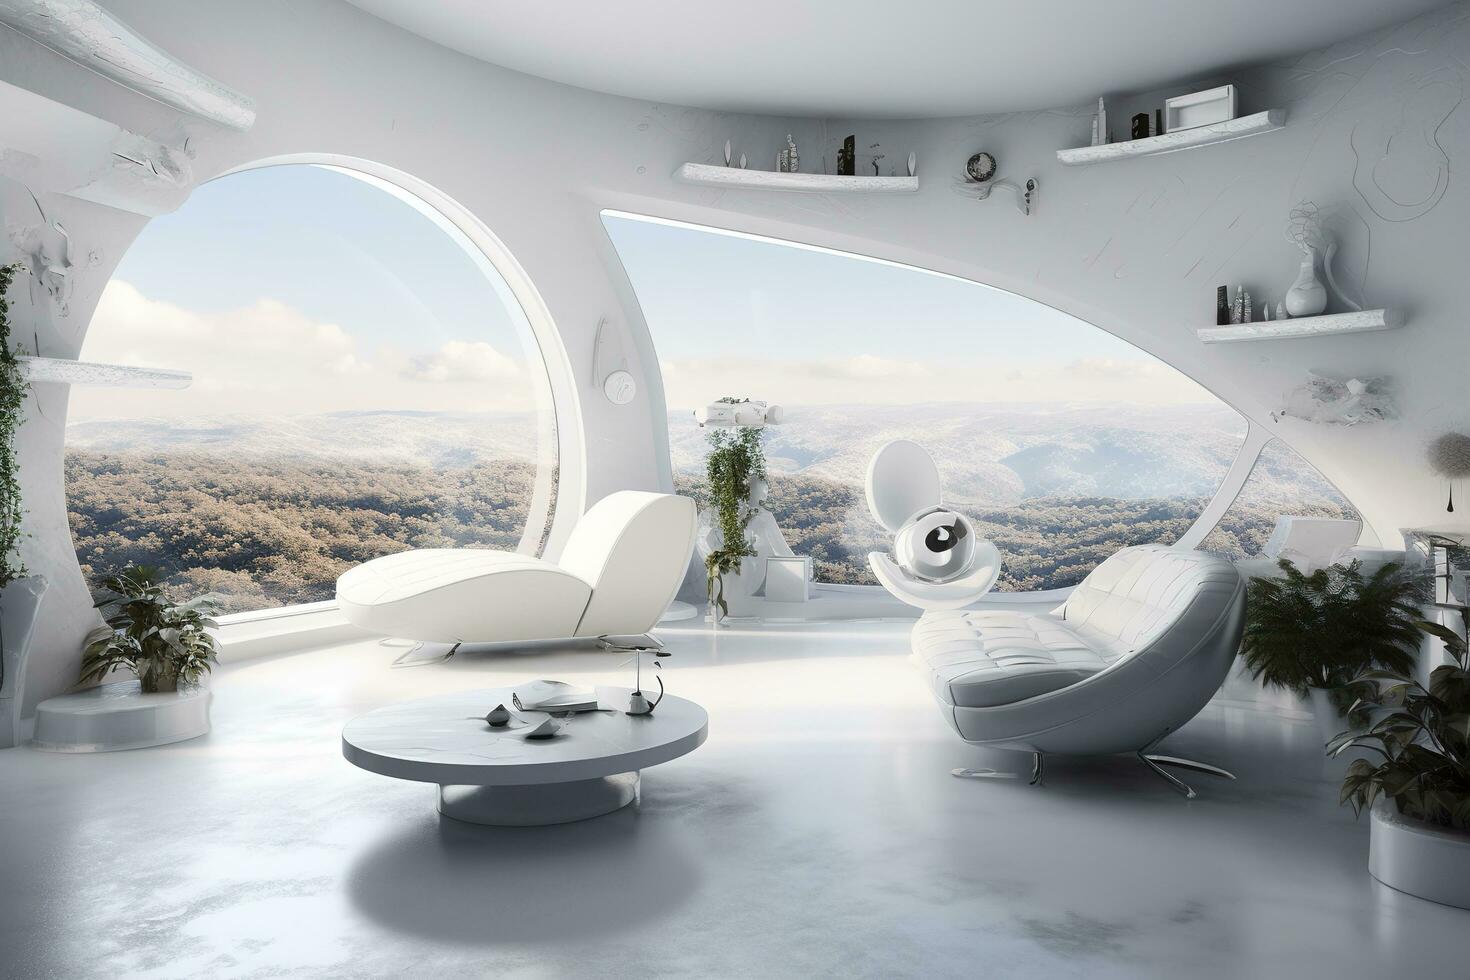 Concept art illustration of sci-fi futuristic interior of space station, generate ai photo